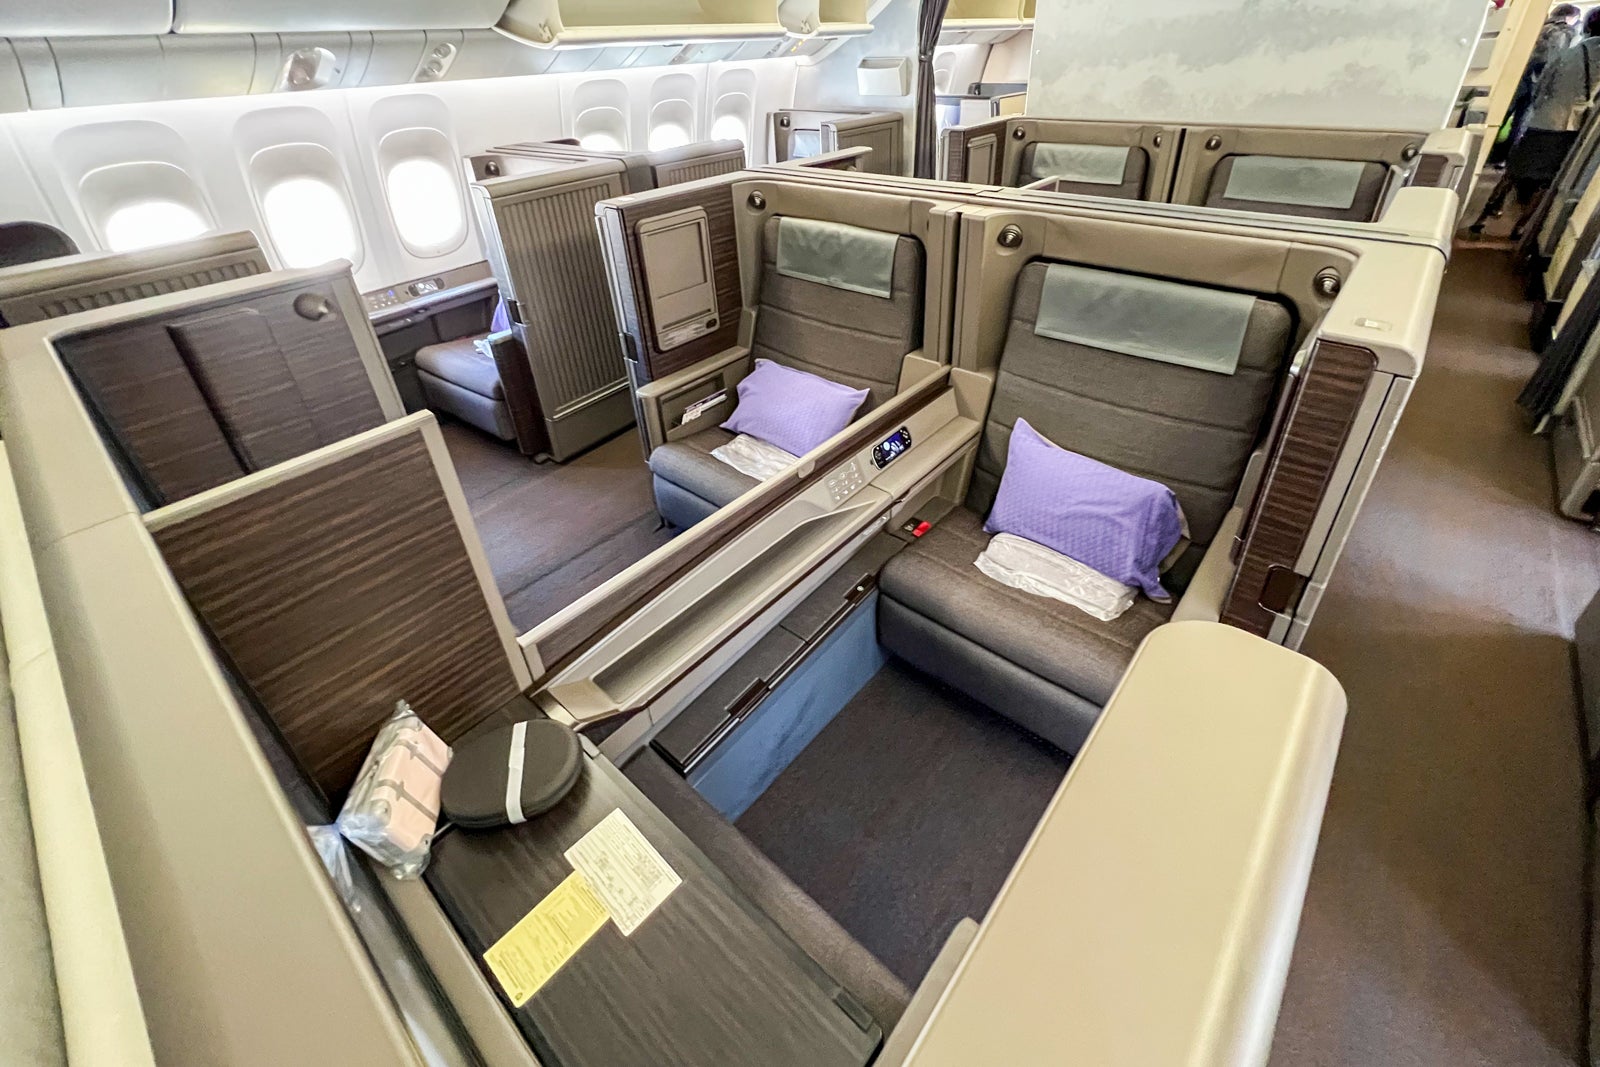 20221017 ANA 777 Star Alliance LAX ANA Lounge NRT ERosen ANA 777 The Suite Cabin center seats 59